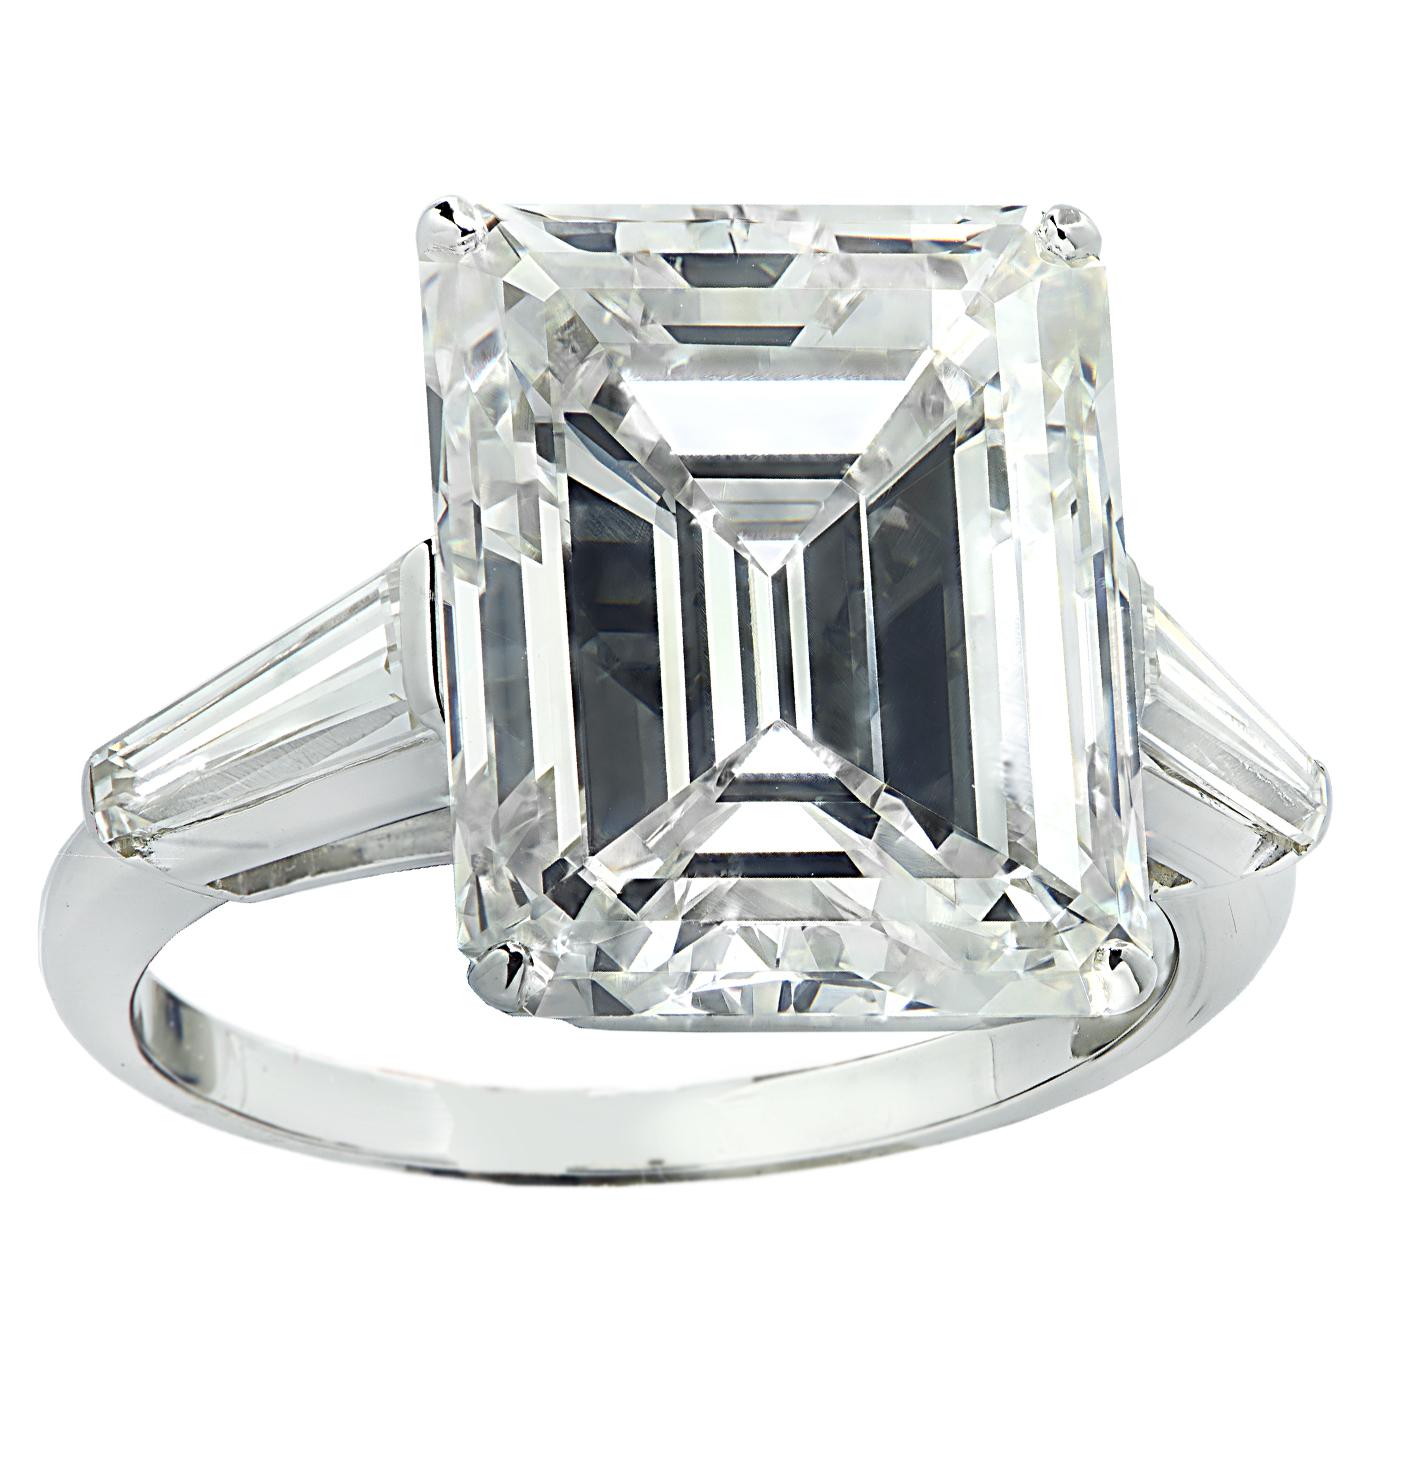 Modern Vivid Diamonds GIA Certified 12.29 Carat Emerald Cut Diamond Engagement Ring